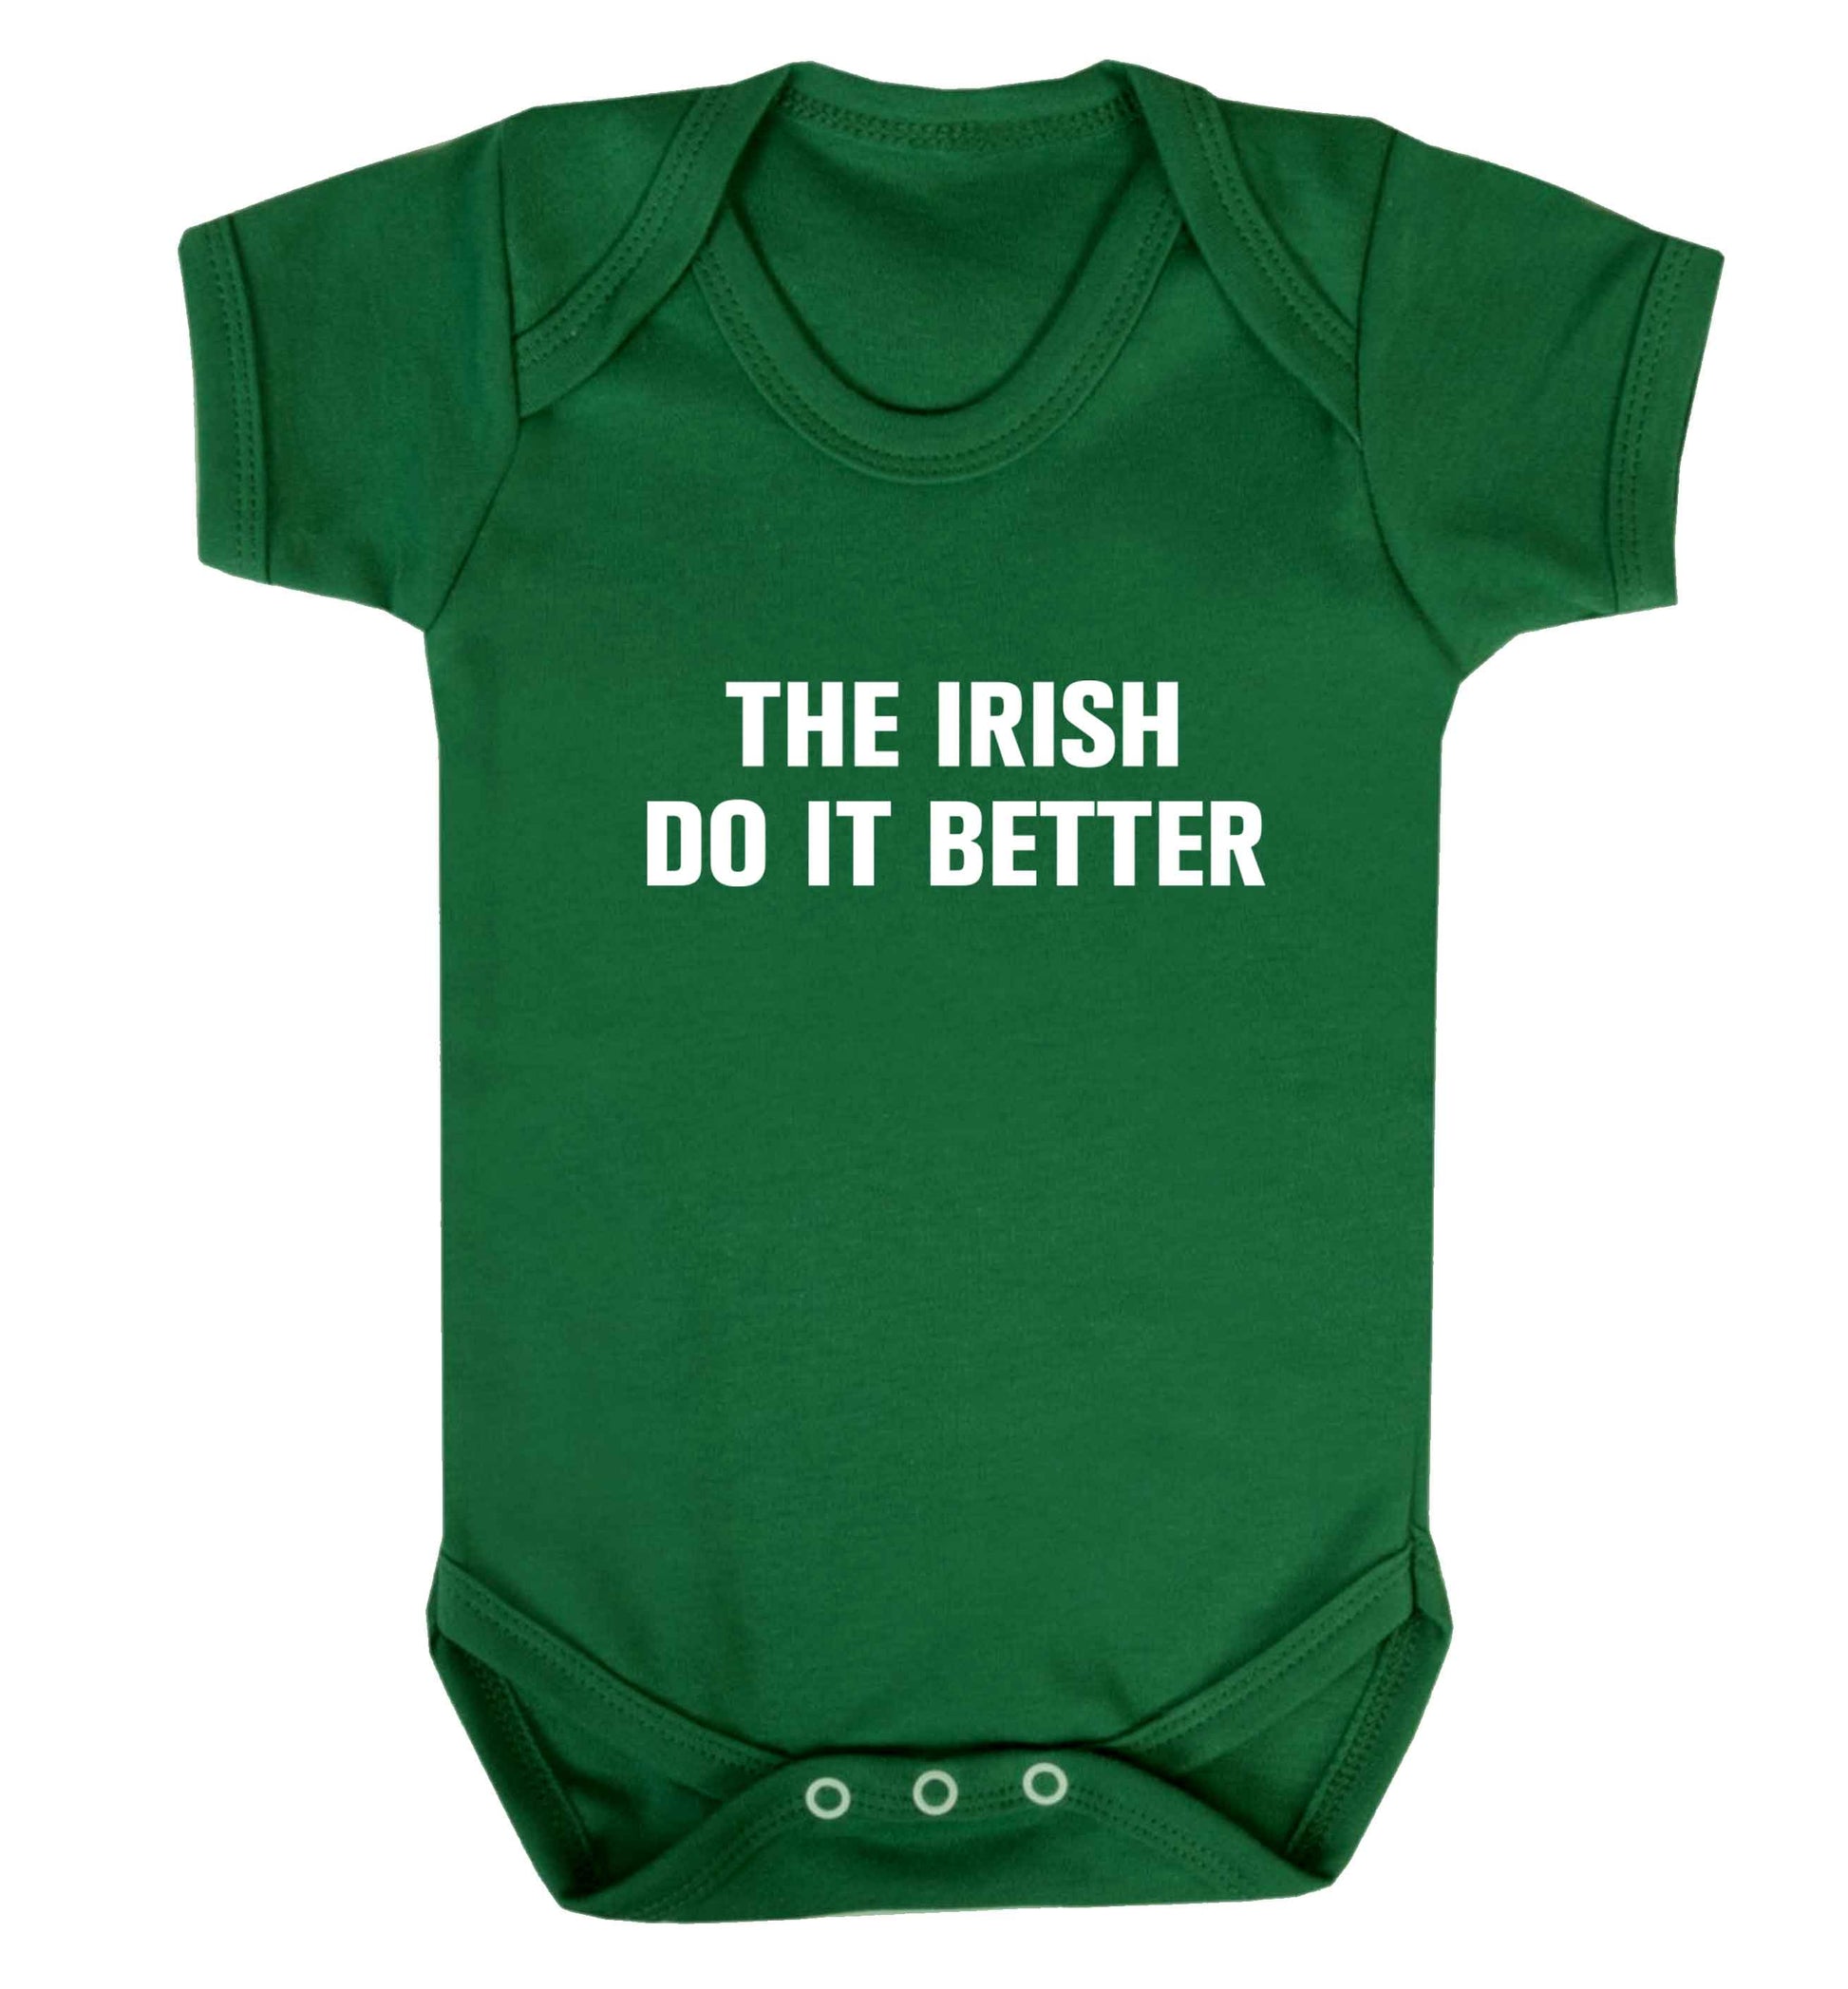 The Irish do it better baby vest green 18-24 months